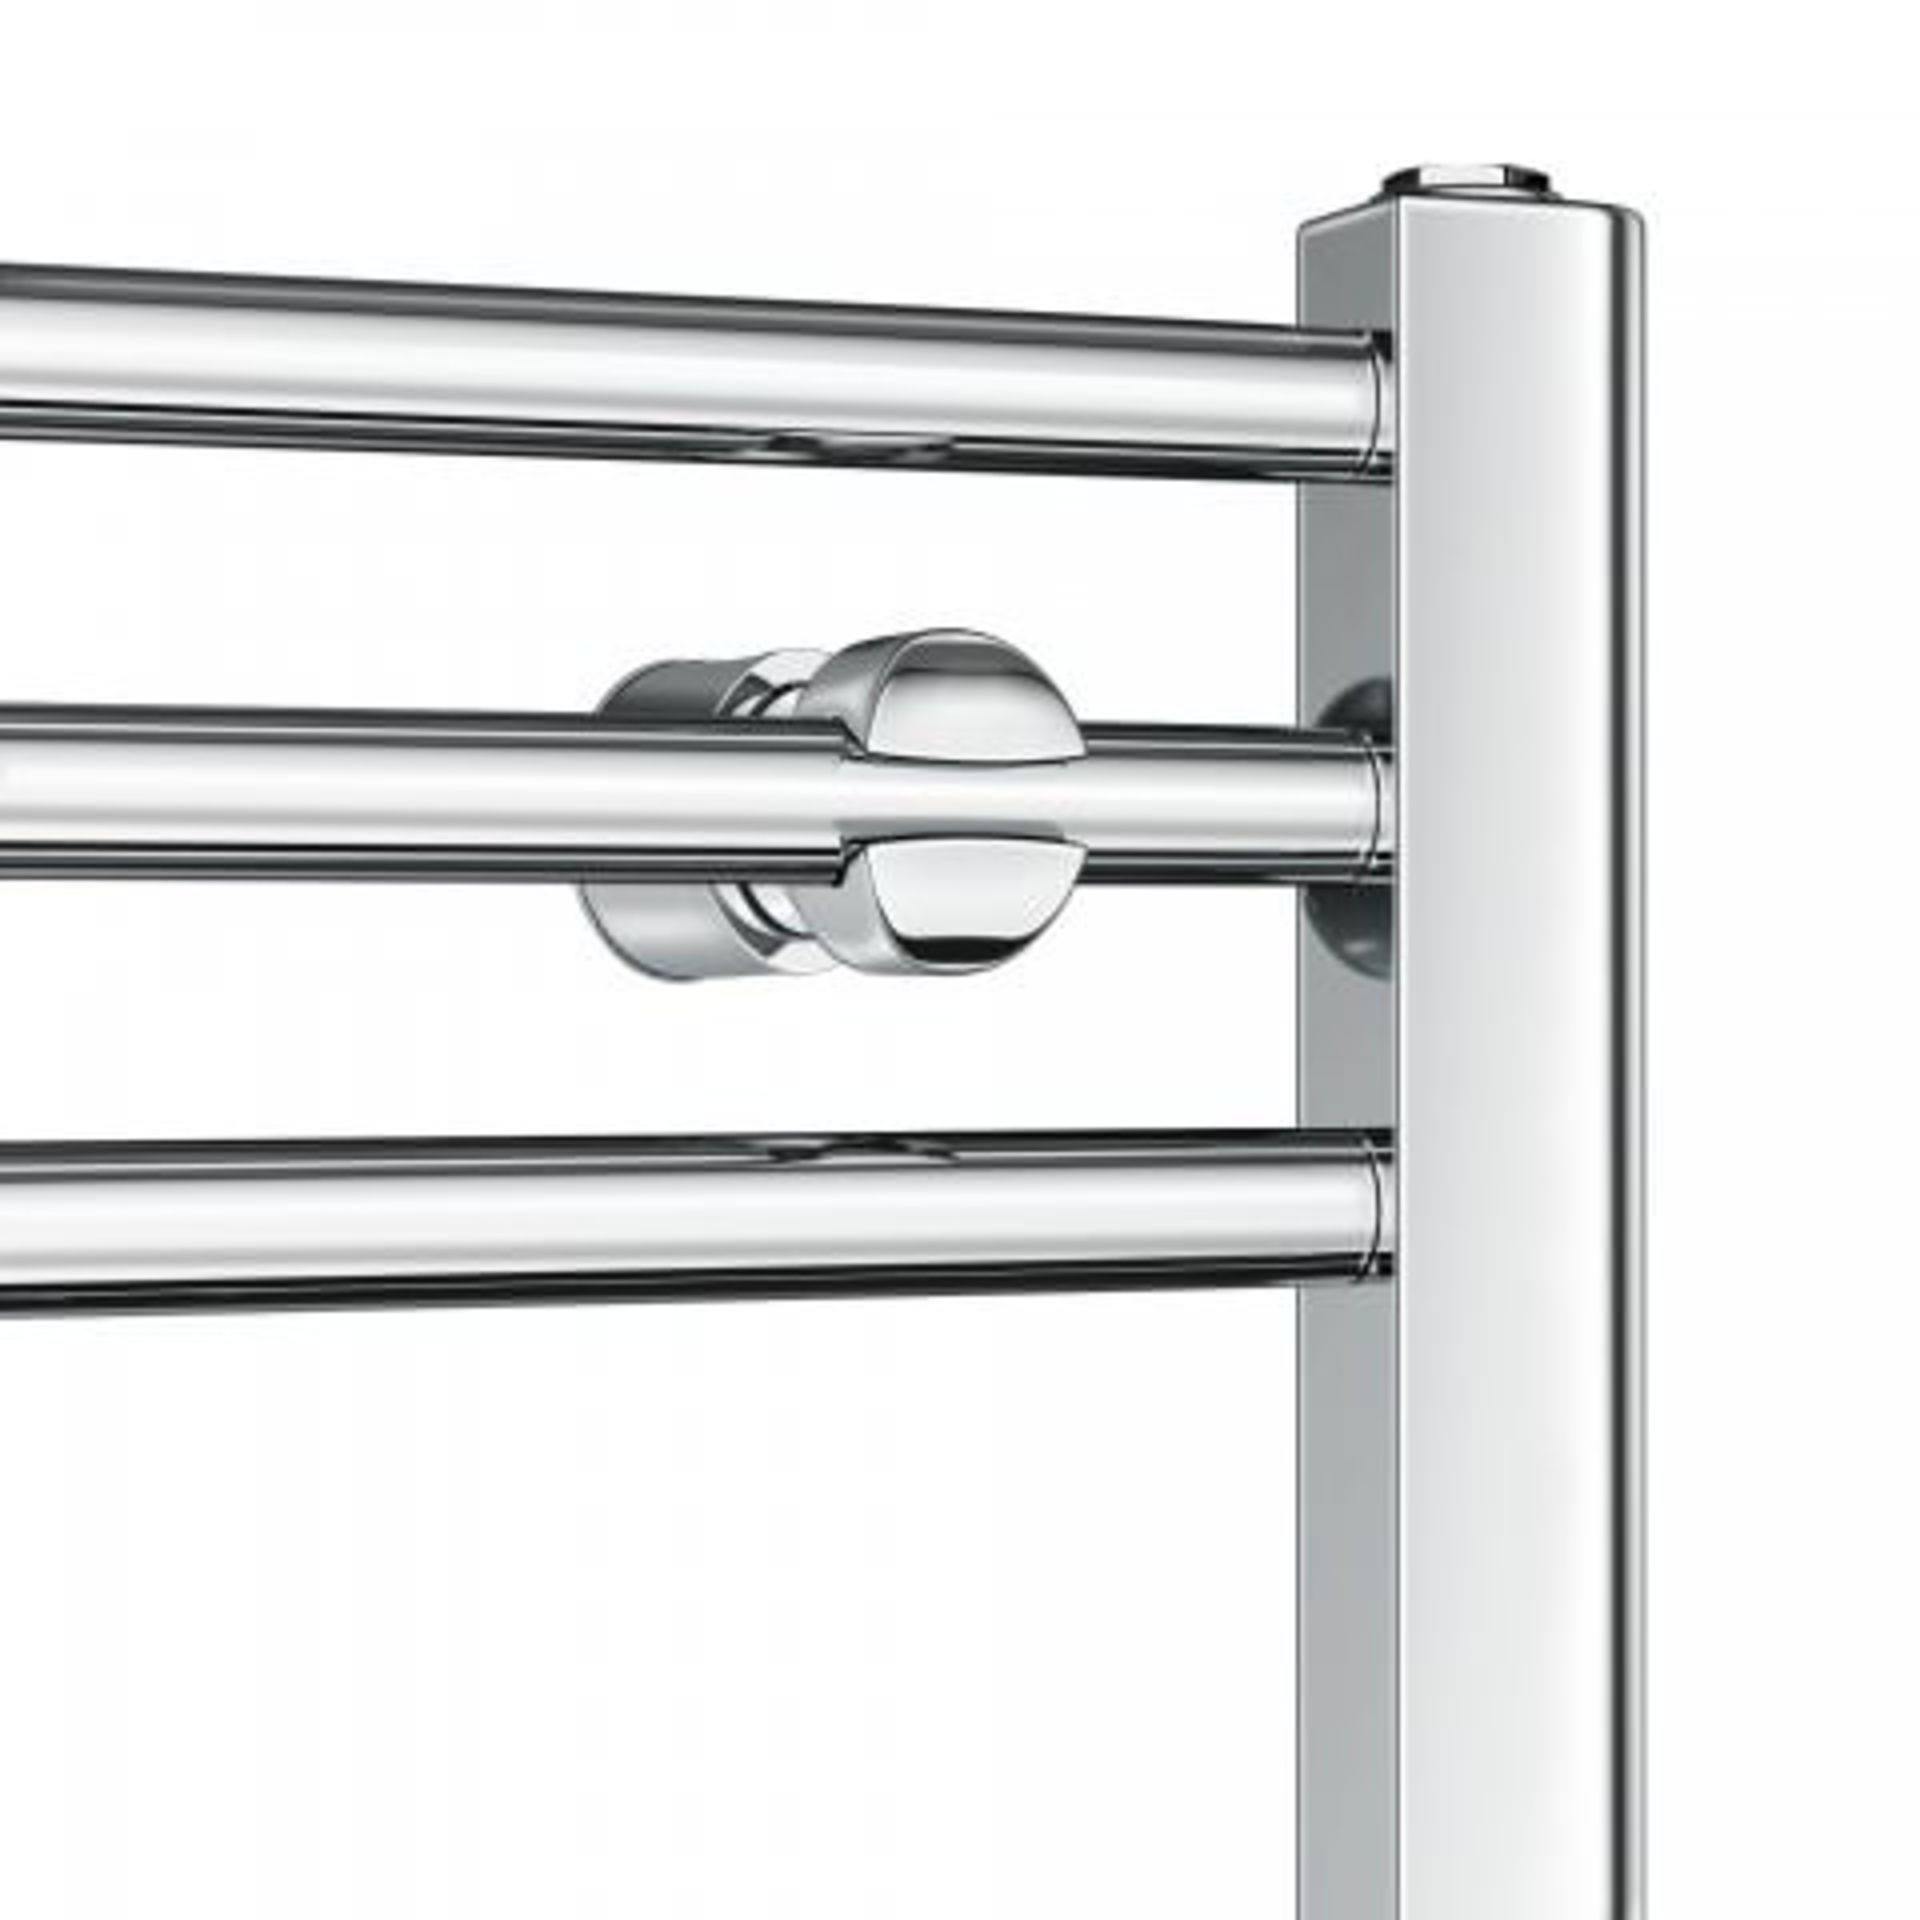 (A35) 1200x300mm - 20mm Tubes - Chrome Heated Straight Rail Ladder Towel Rail - Natasha Basic. - Image 2 of 4